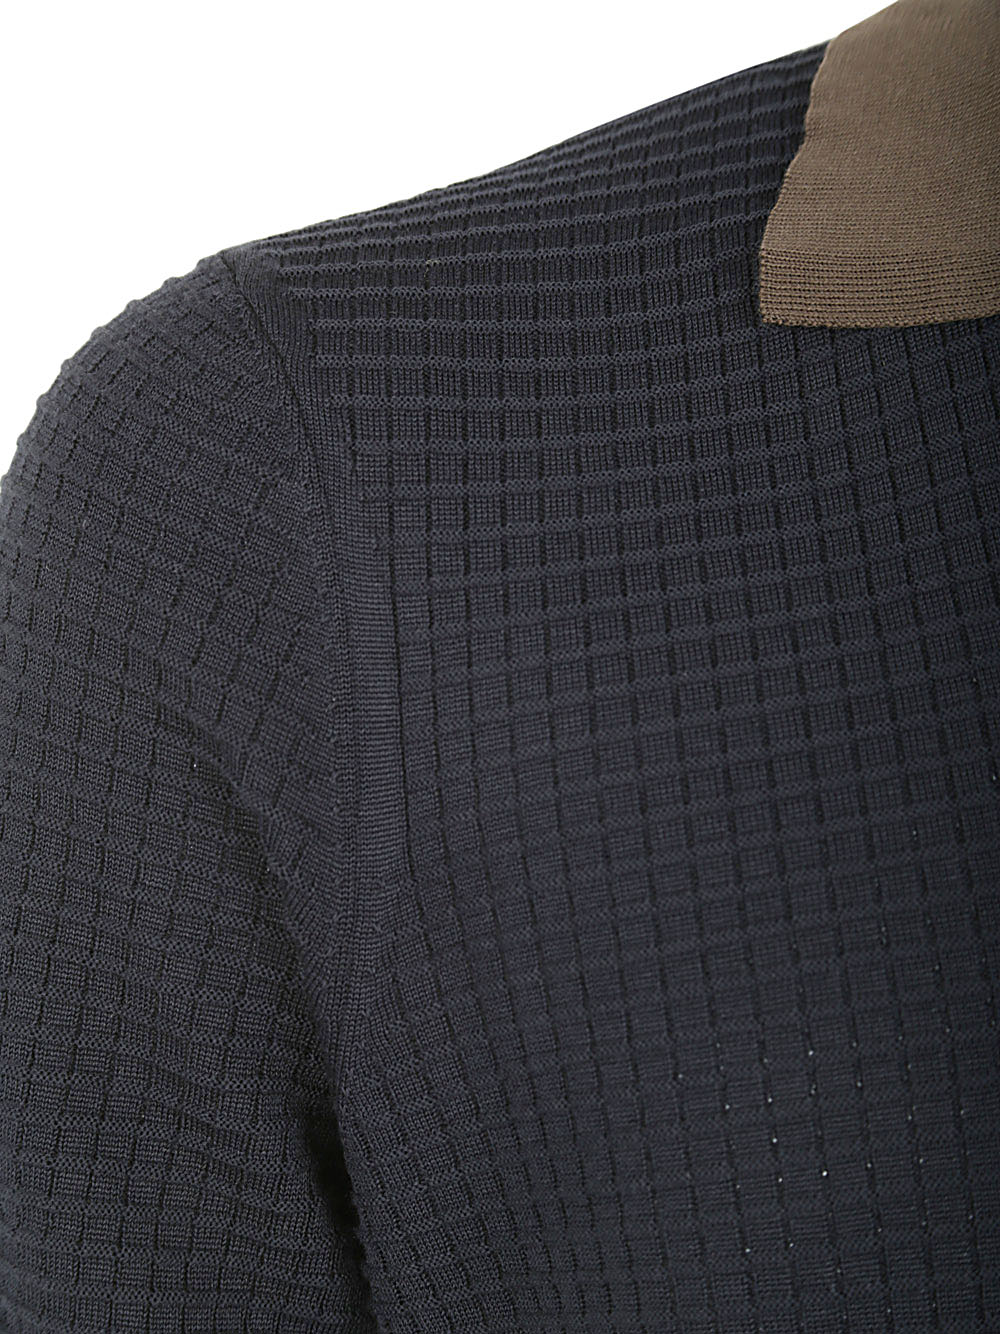 3/4 Sleeves Sweater